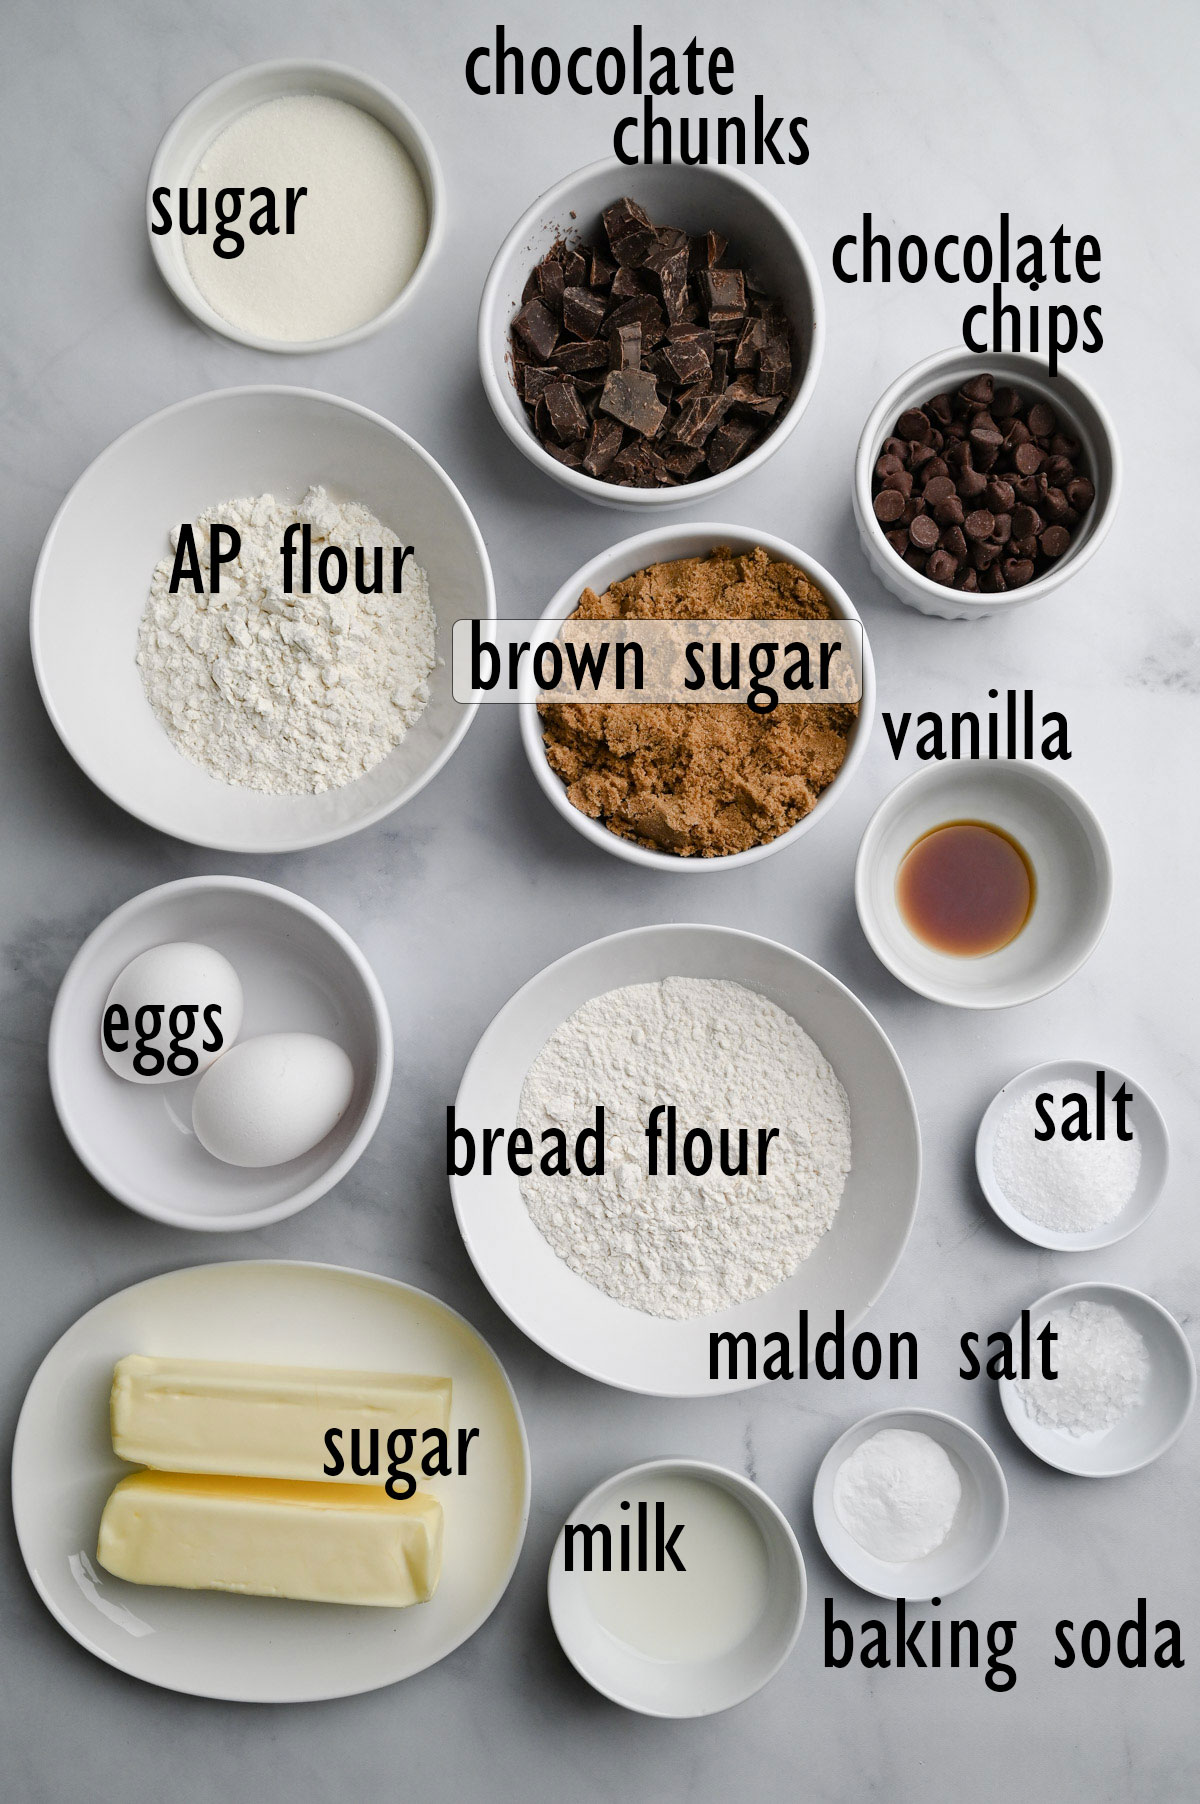 Cookie ingredients including flour, sugar, brown sugar, butter, chocolate, eggs, salt, vanilla and baking soda.